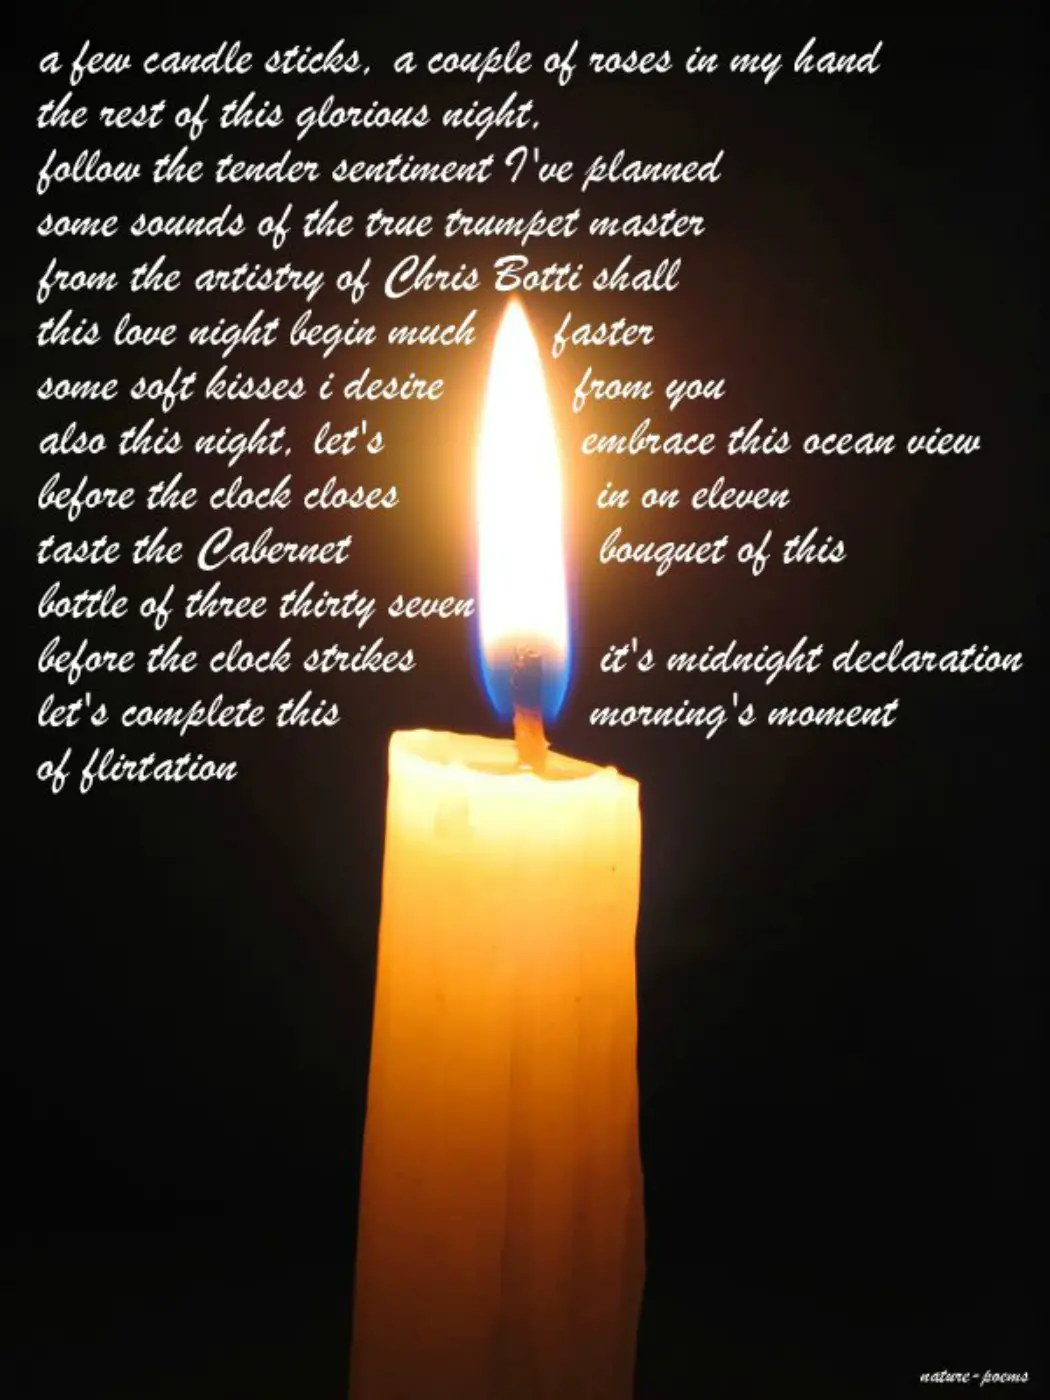 Candlelight vigil Poems